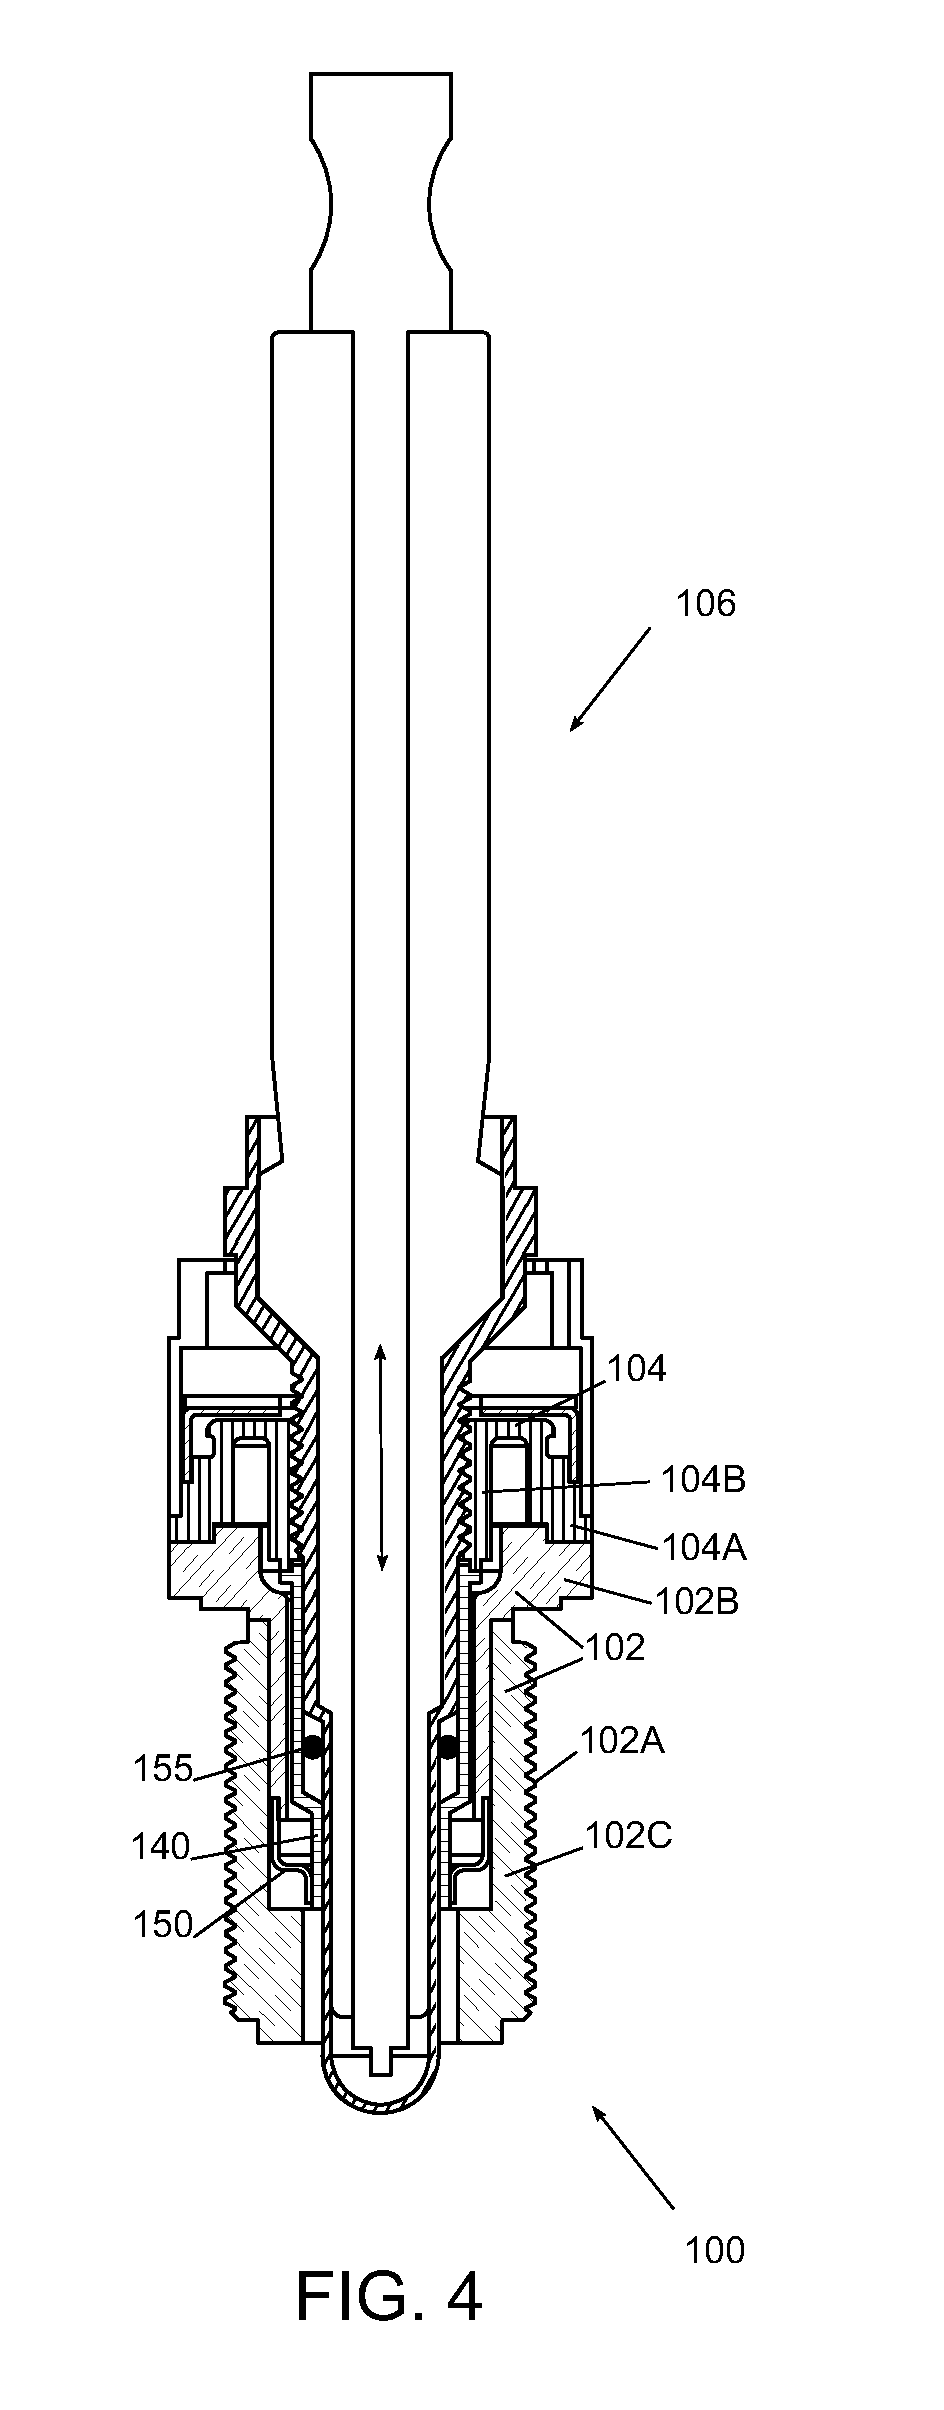 Pressure-measuring plug for a combustion engine